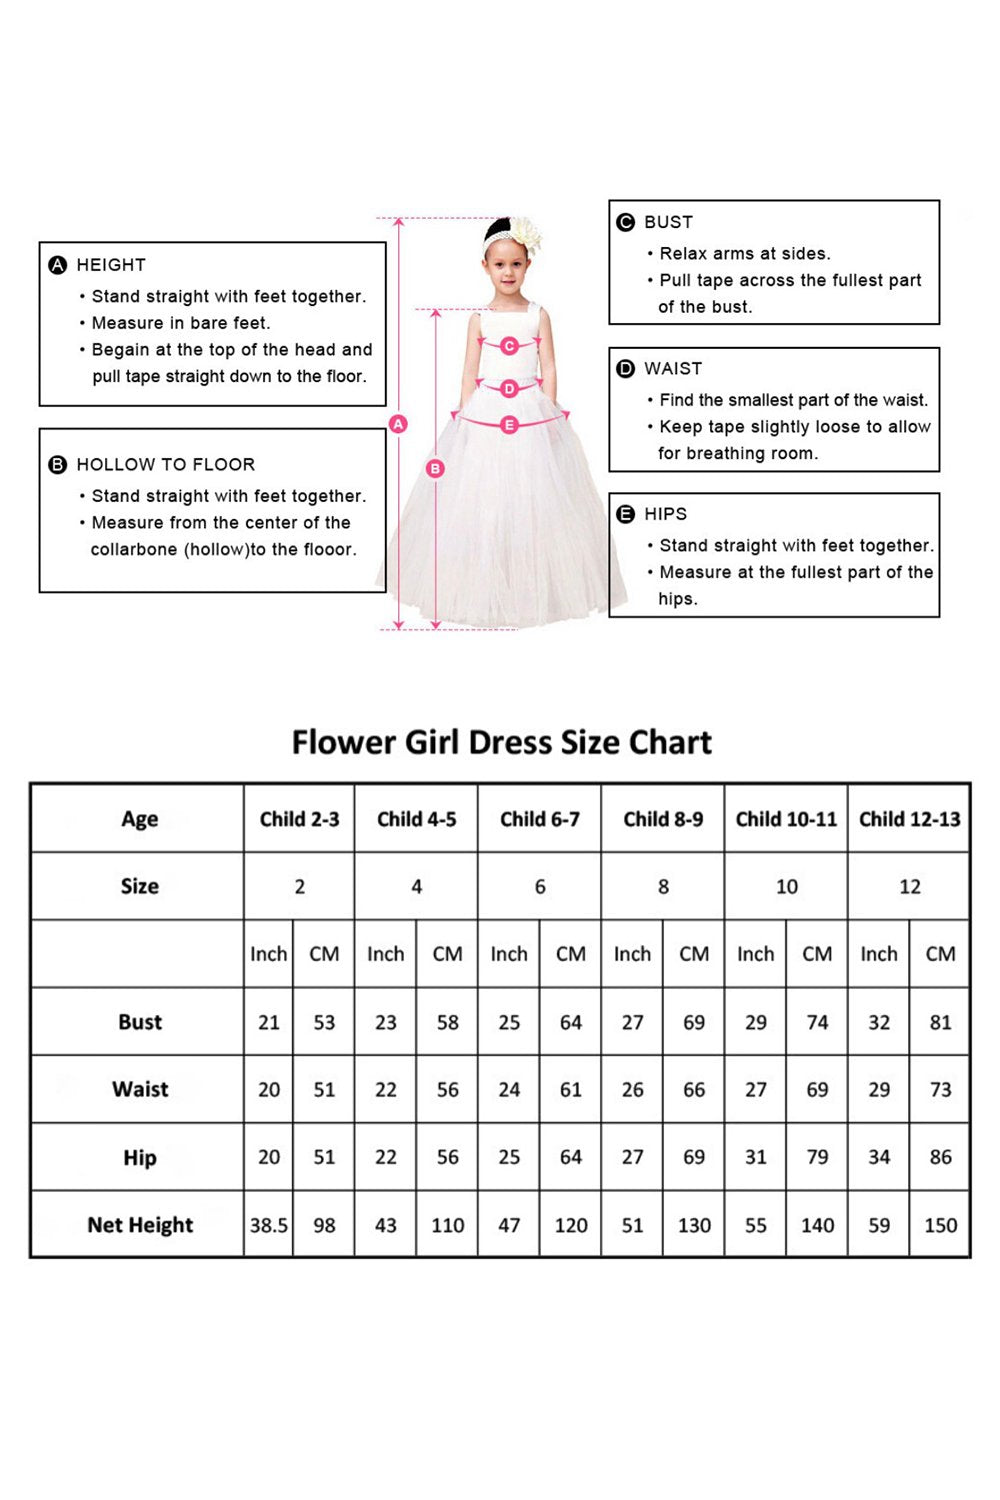 A-Line Floor Length Satin Lace  Flower Girl Dress CF0338